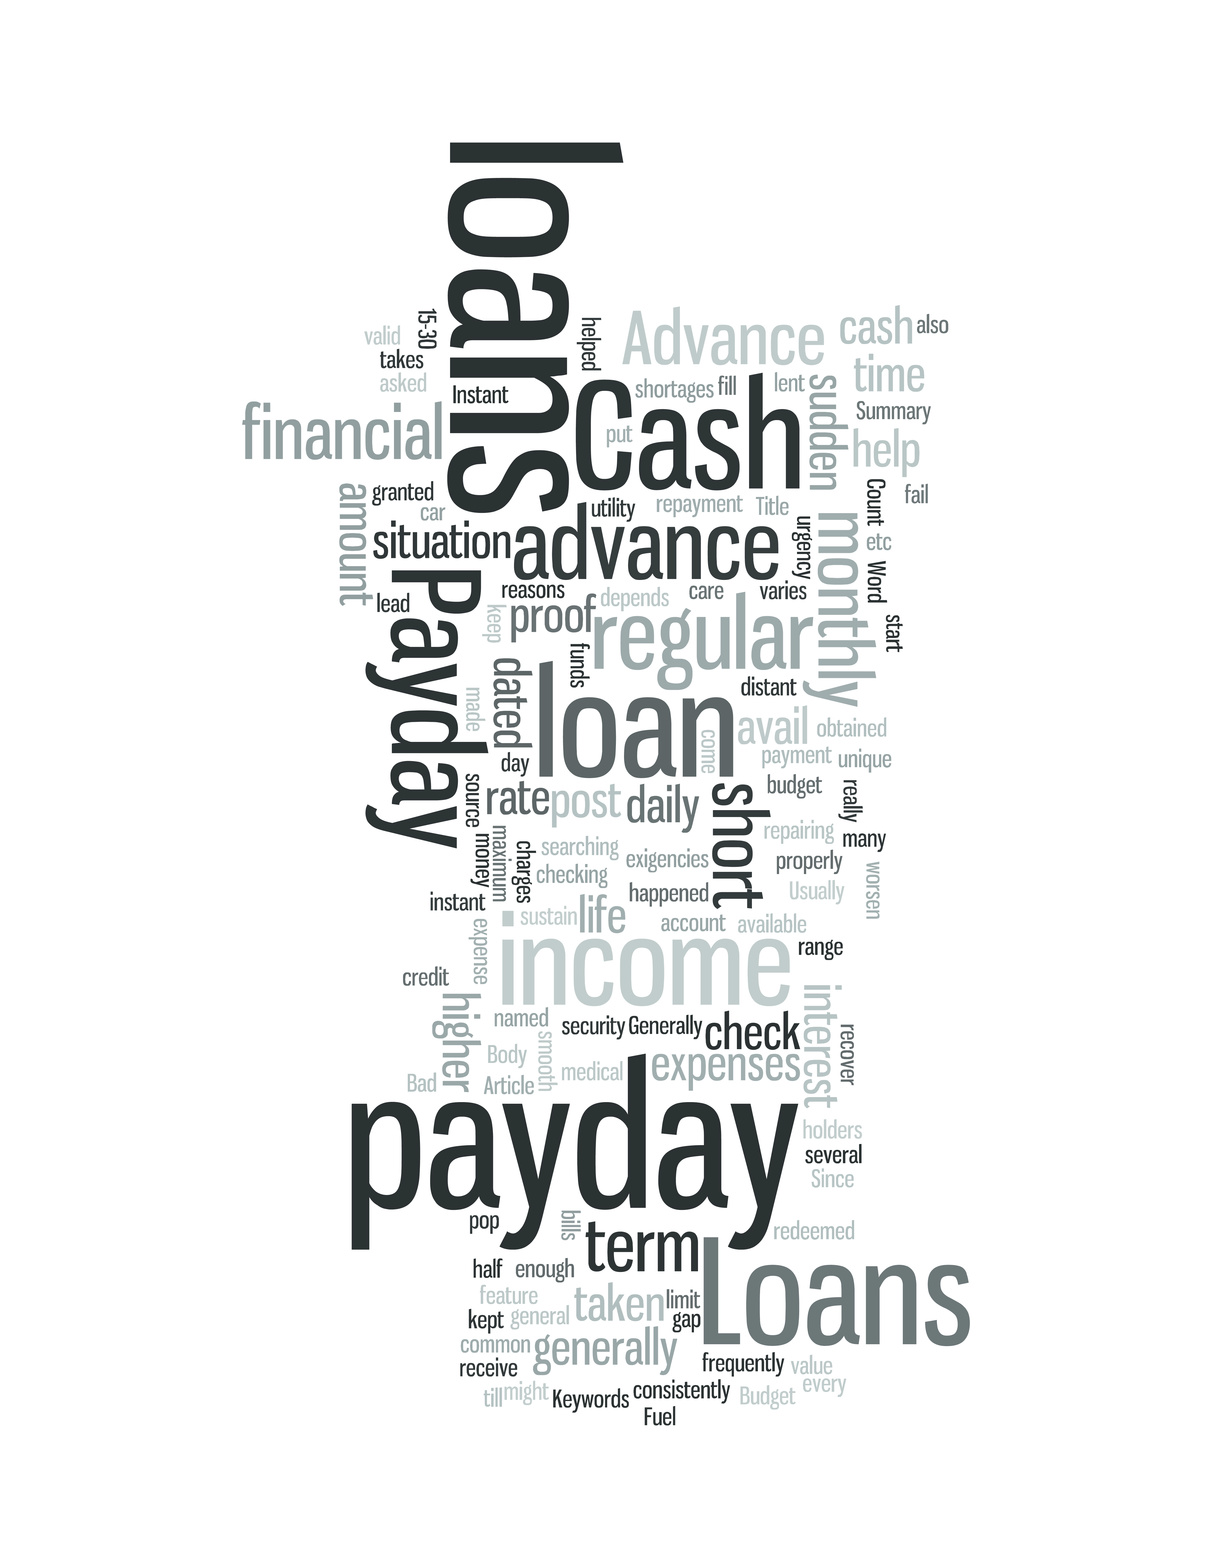 7 Common Reasons for Short Term Cash Advance Loans